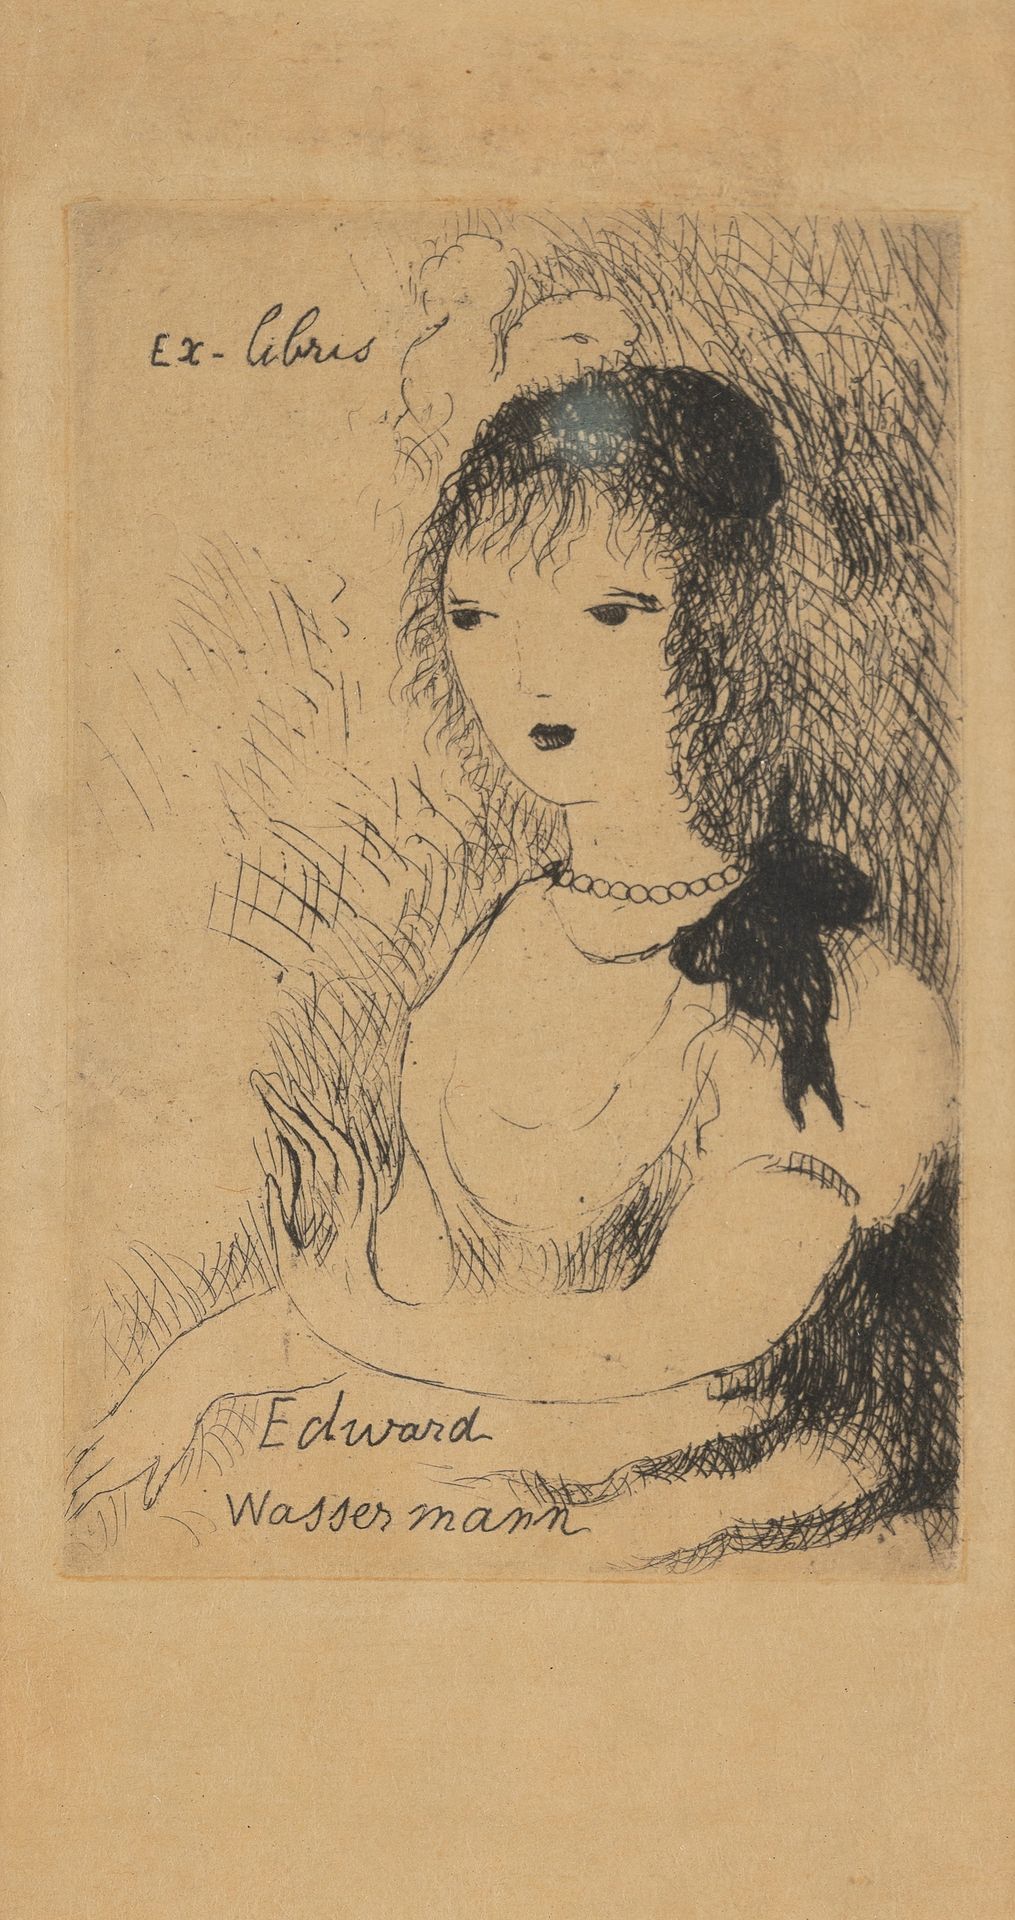 Null Dopo Marie LAURENCIN (1883-1956)

Ex libris per Edward Wasserman

Stampa in&hellip;